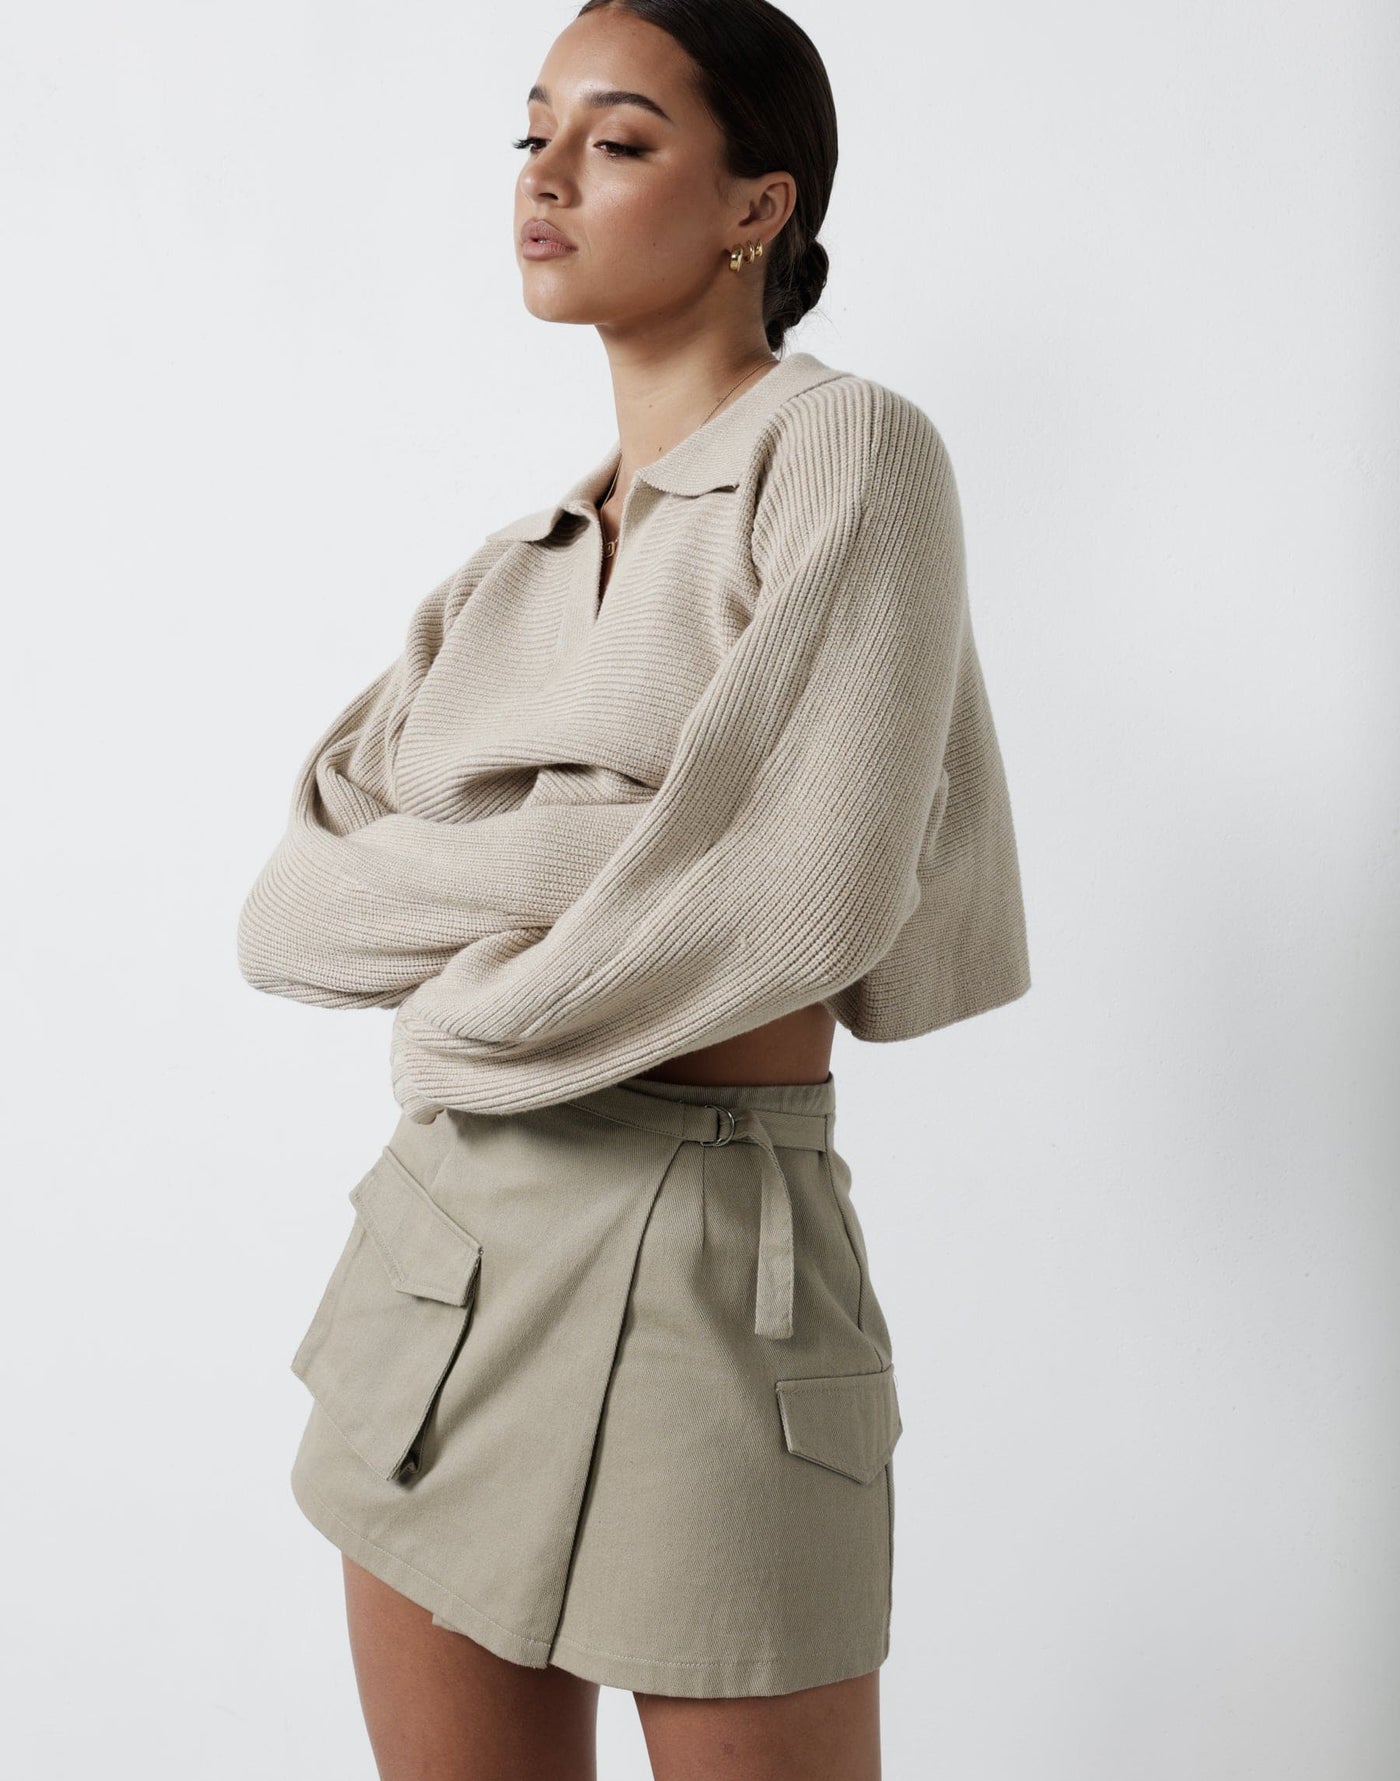 Scottie Mini Skirt (Khaki) - Cargo Wrap Khaki Mini Skirt - Women's Skirt - Charcoal Clothing